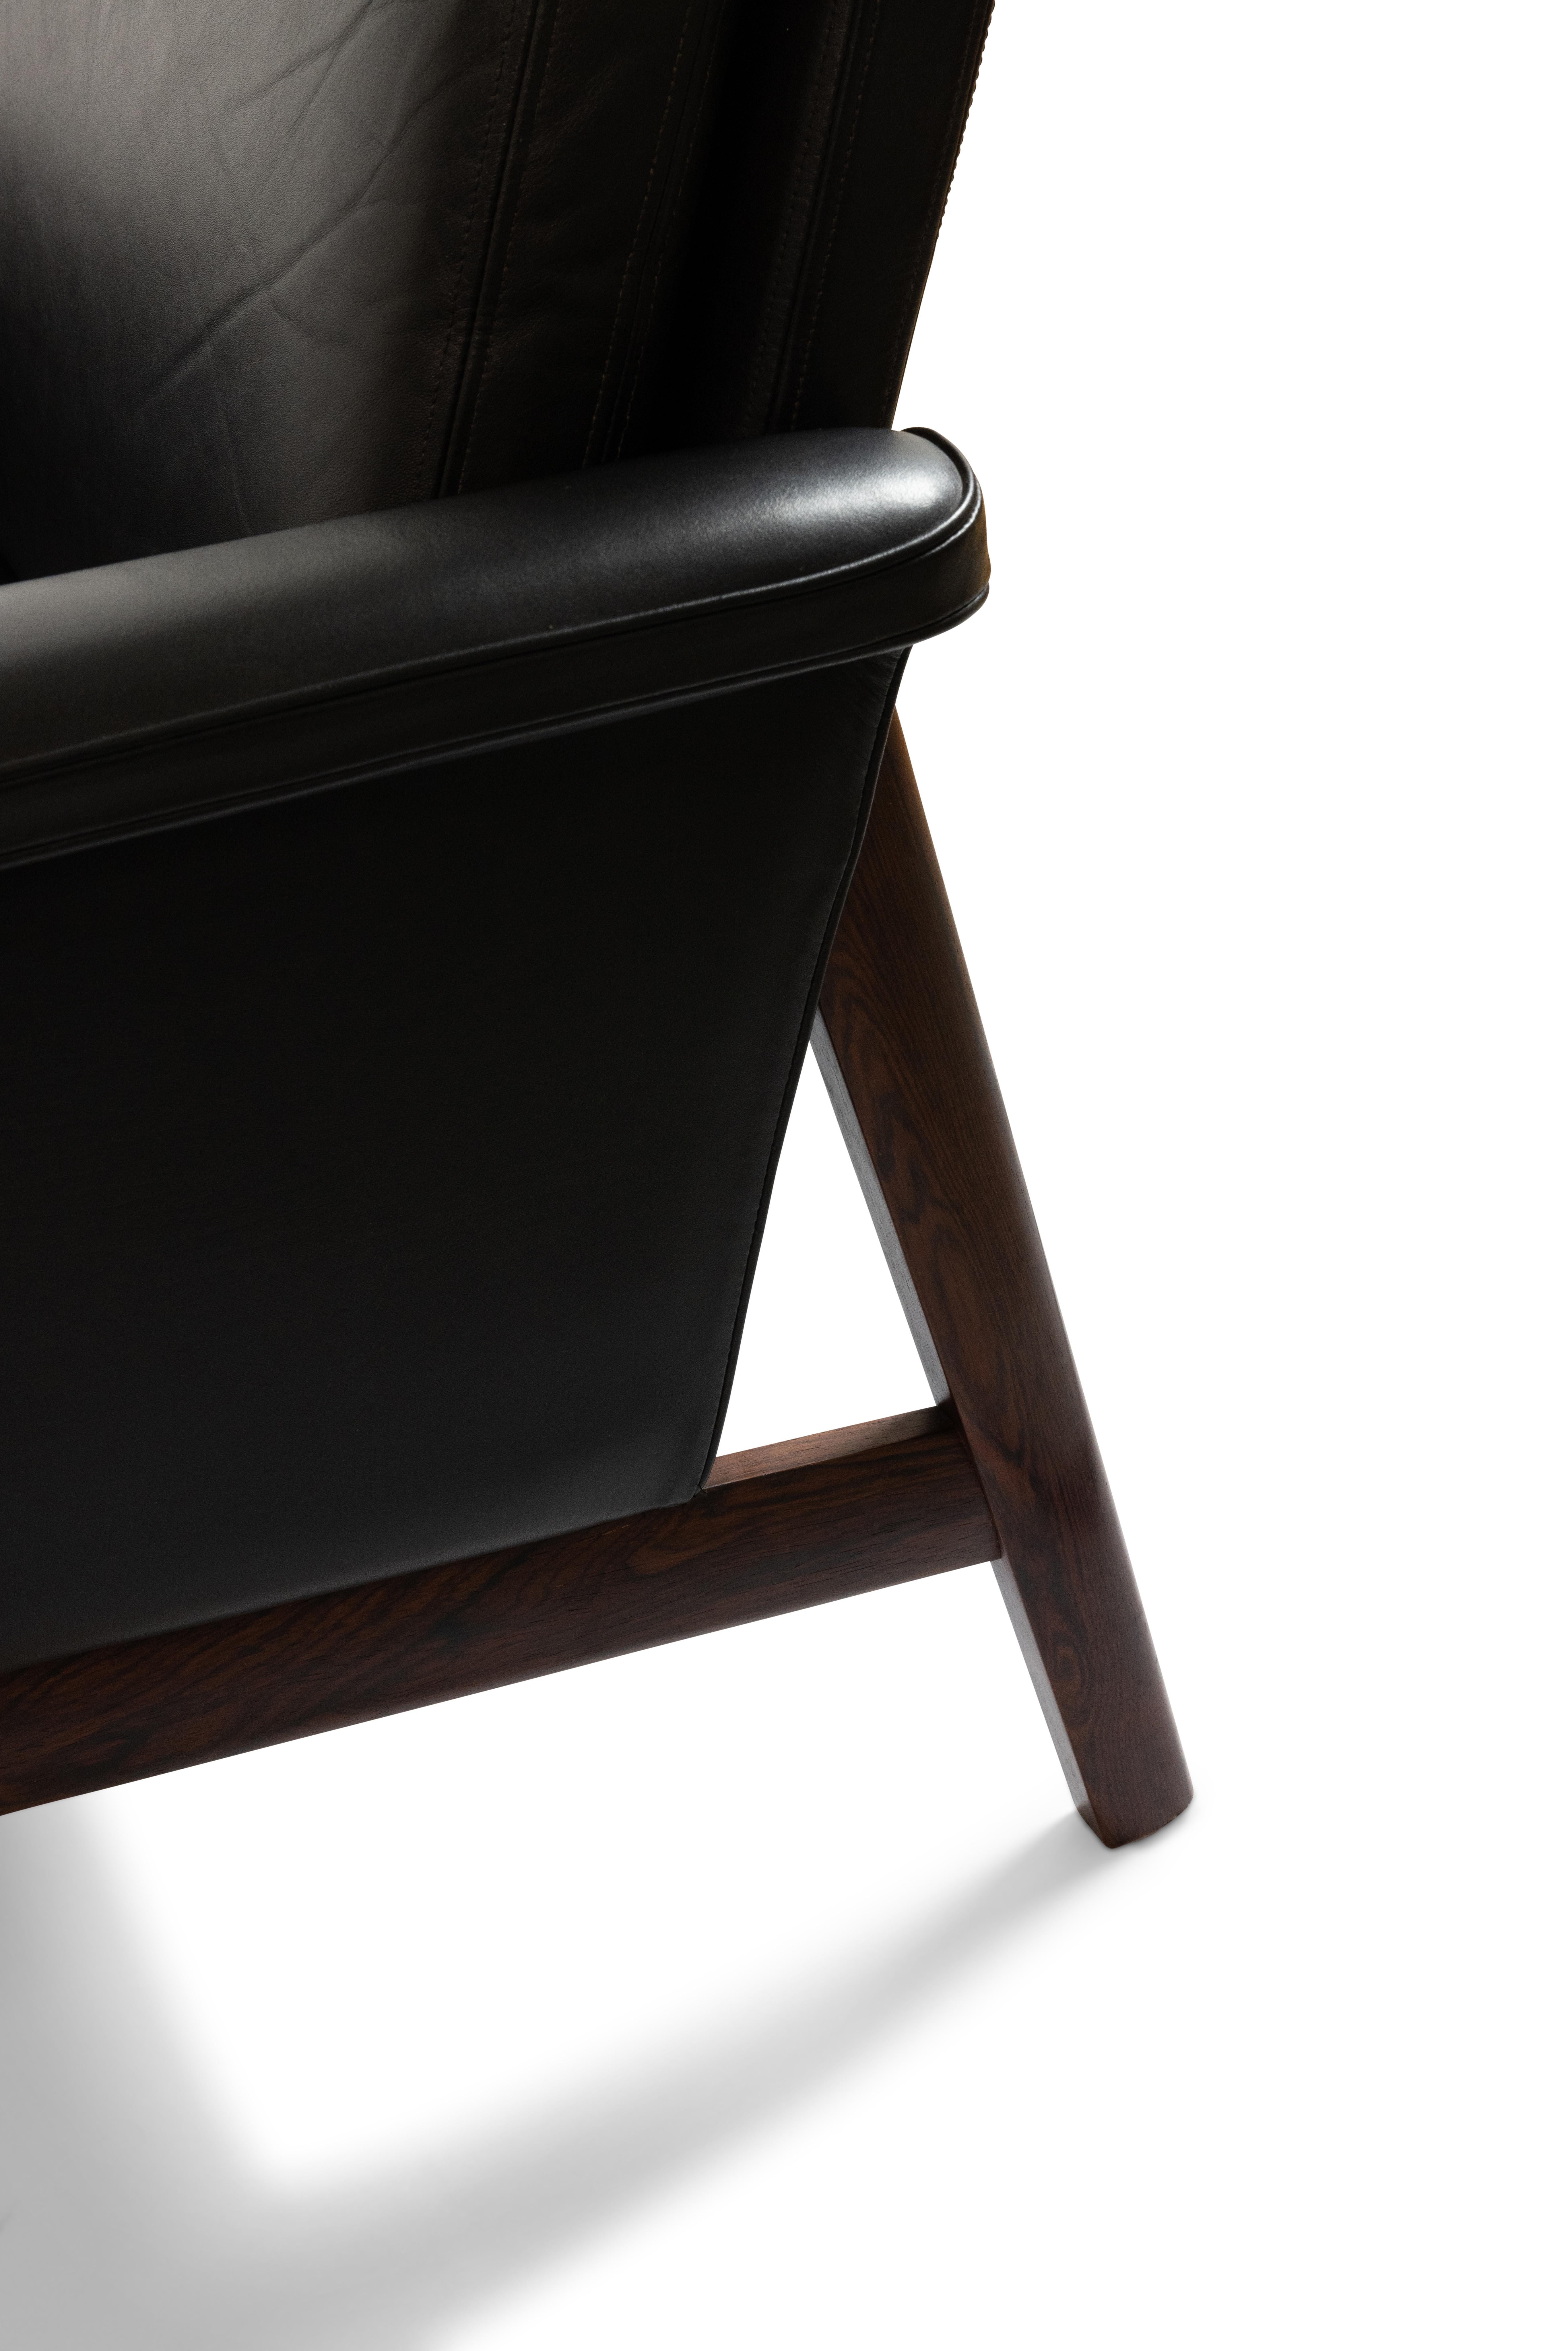 Finn Juhl Three Seat Sofa with Original Black Leather, Model 218/3, Denmark For Sale 4